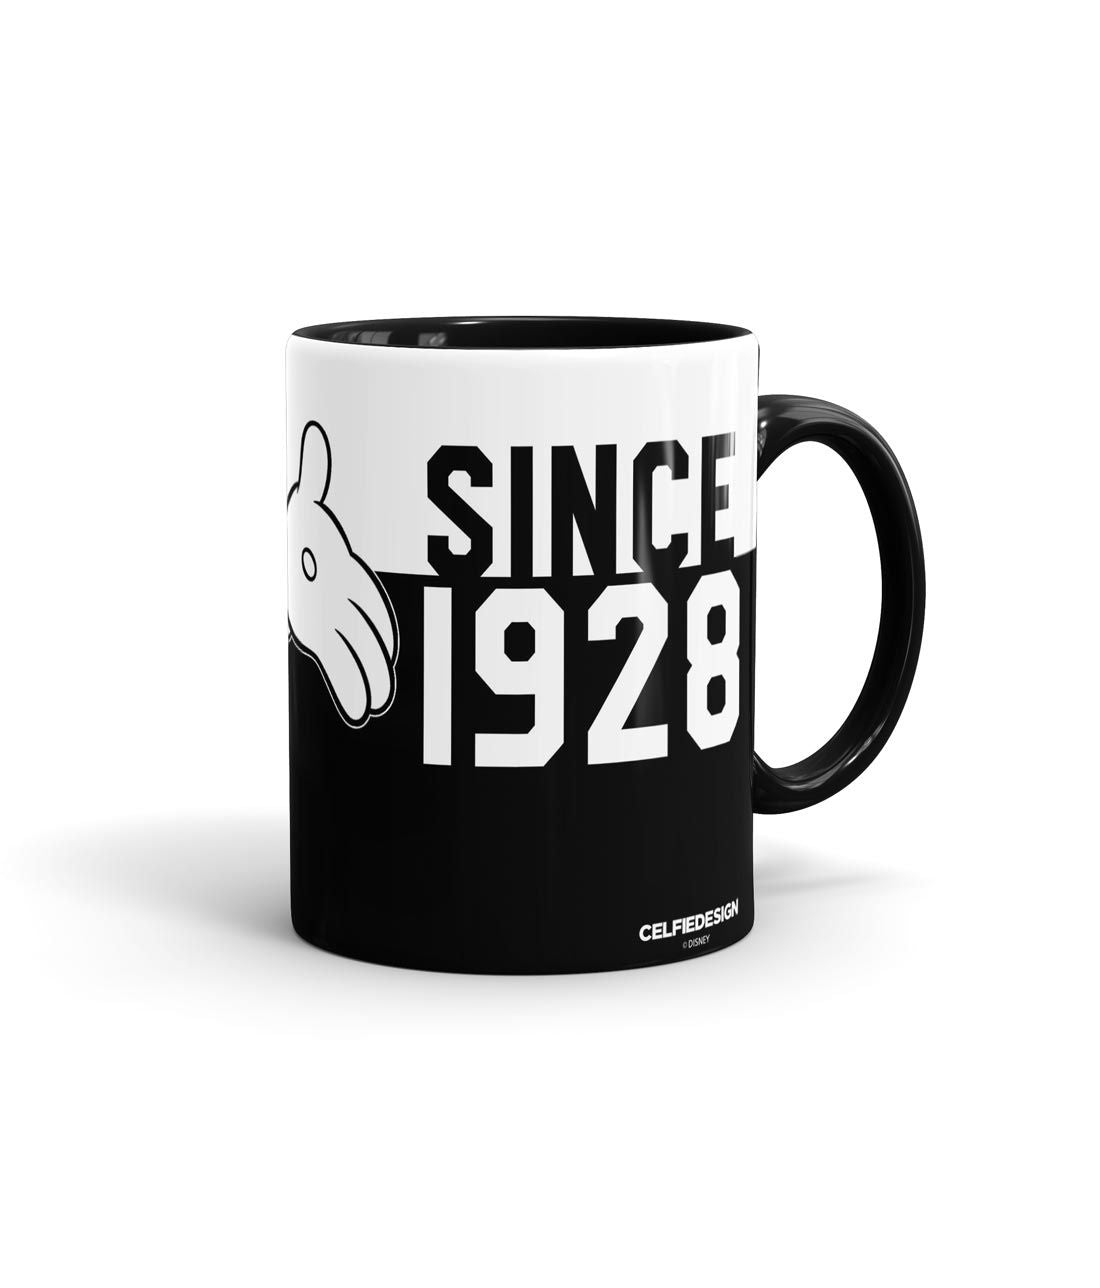 Mickey since 1928 - Coffee Mugs Black